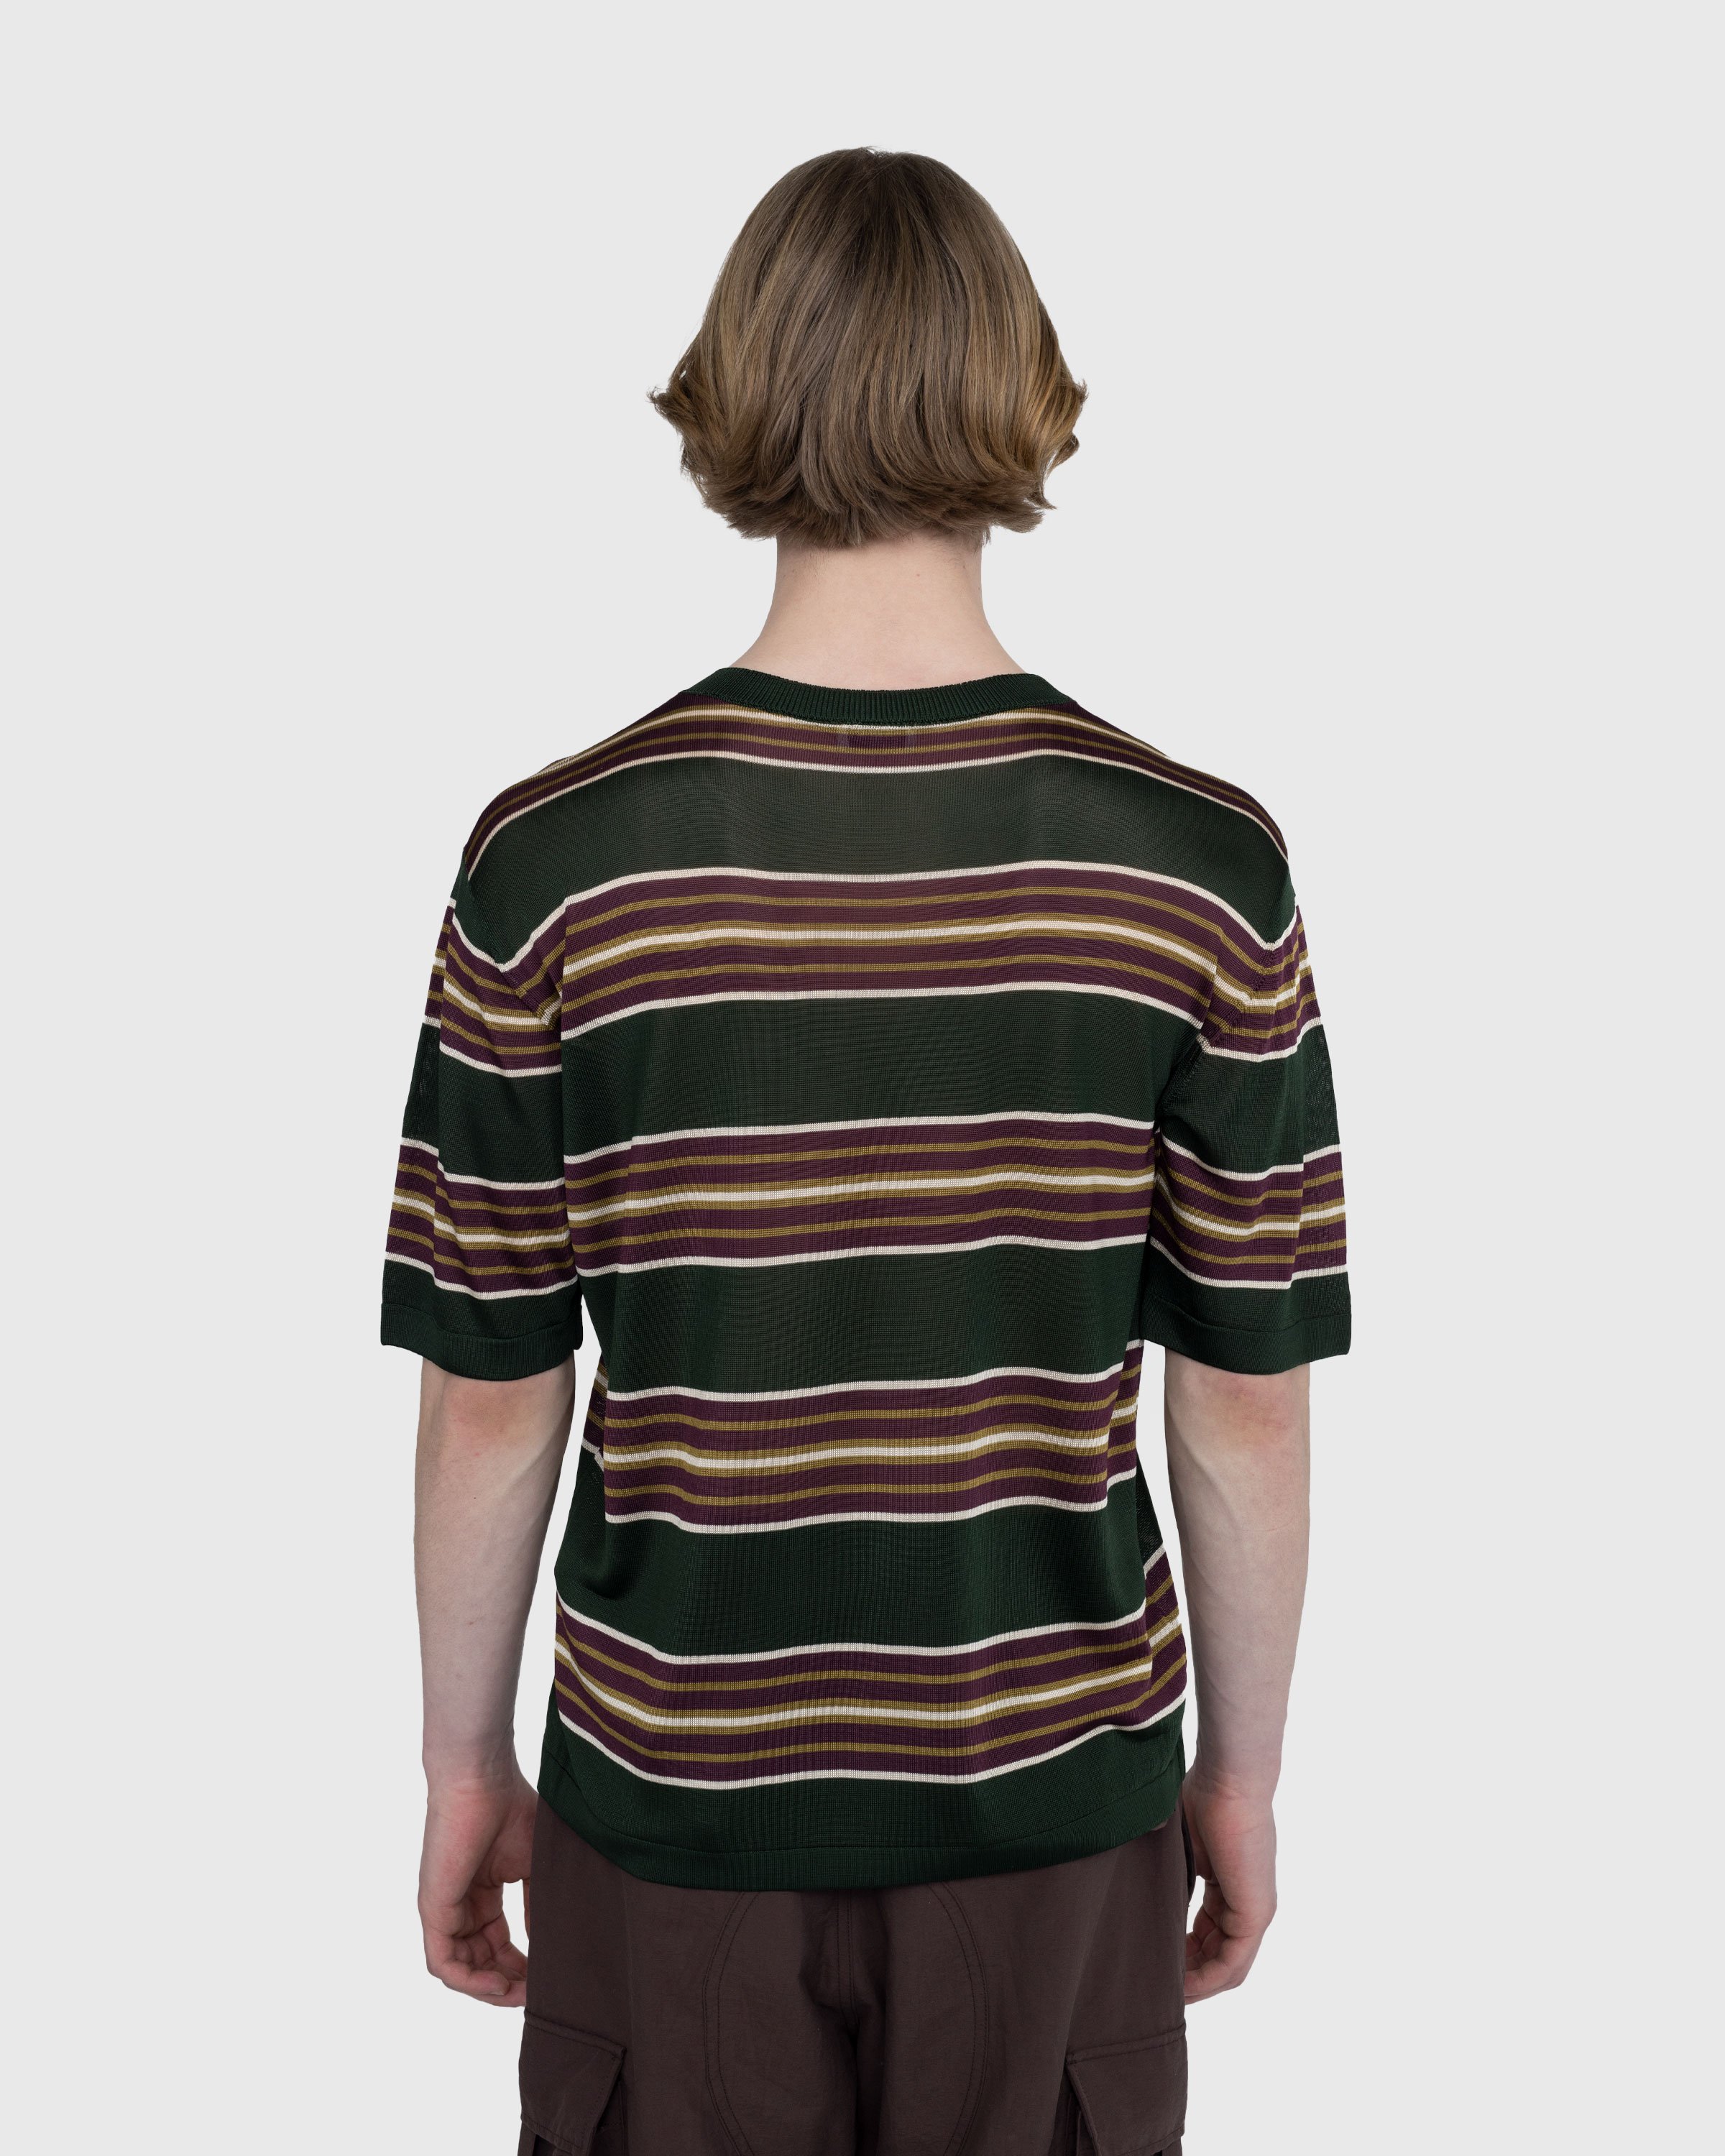 Dries van Noten - Mias Knit T-Shirt Bottle - Clothing - Green - Image 4